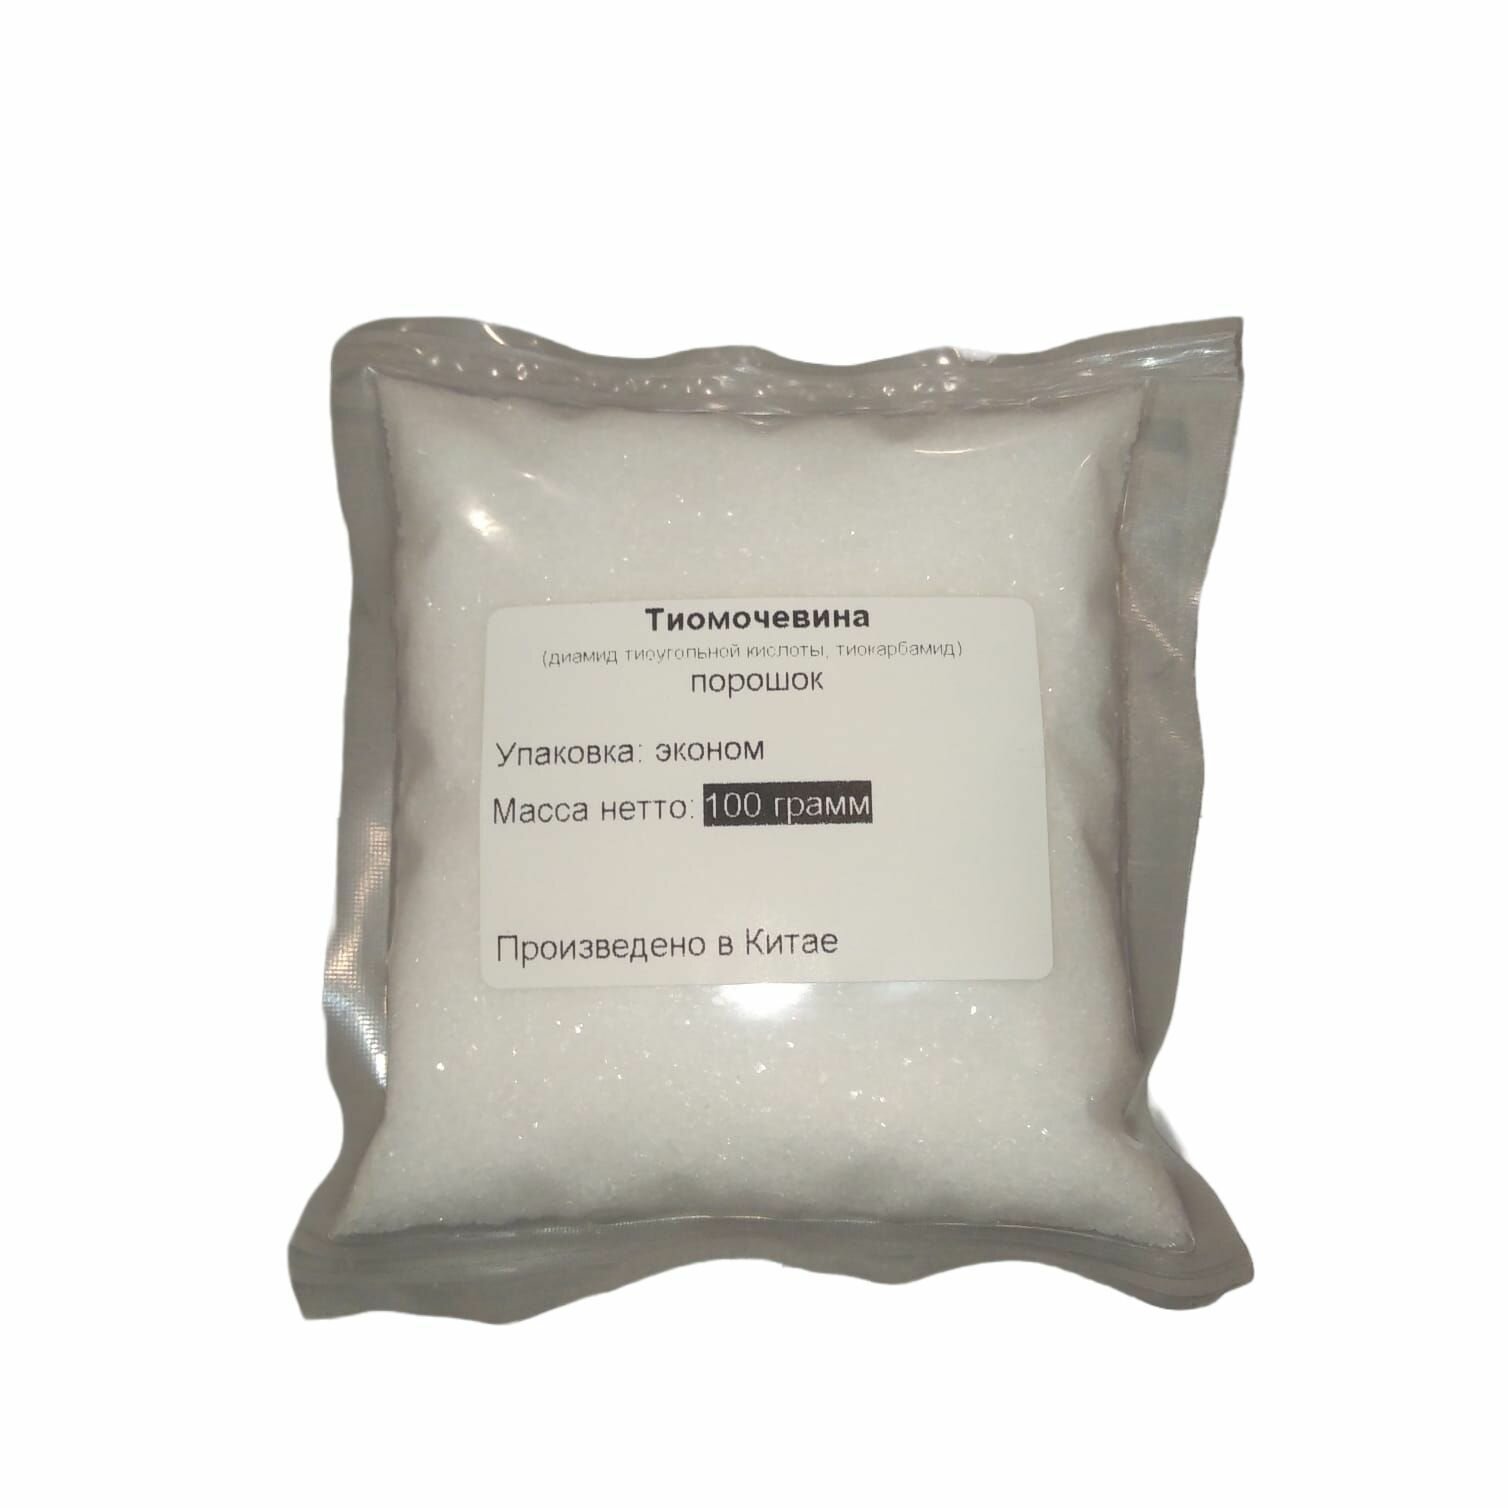 Тиомочевина (диамид тиоугольной кислоты, тиокарбамид) - 100 грамм